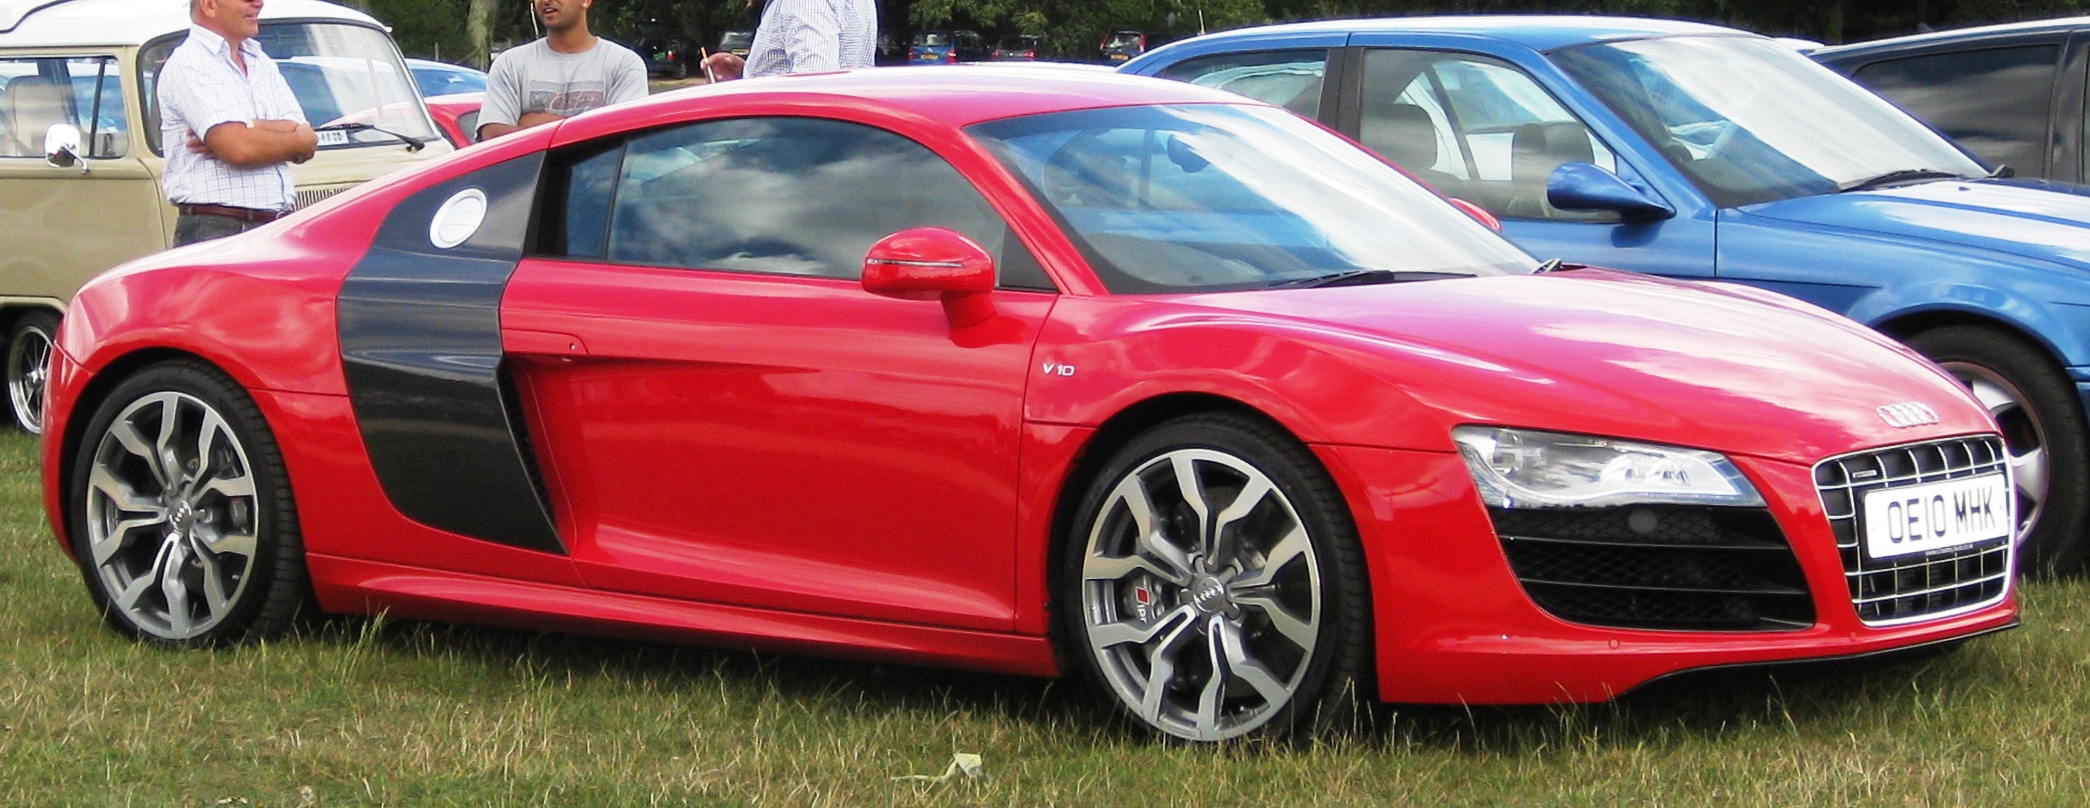 Audi R8 Jul 2010 5204cc